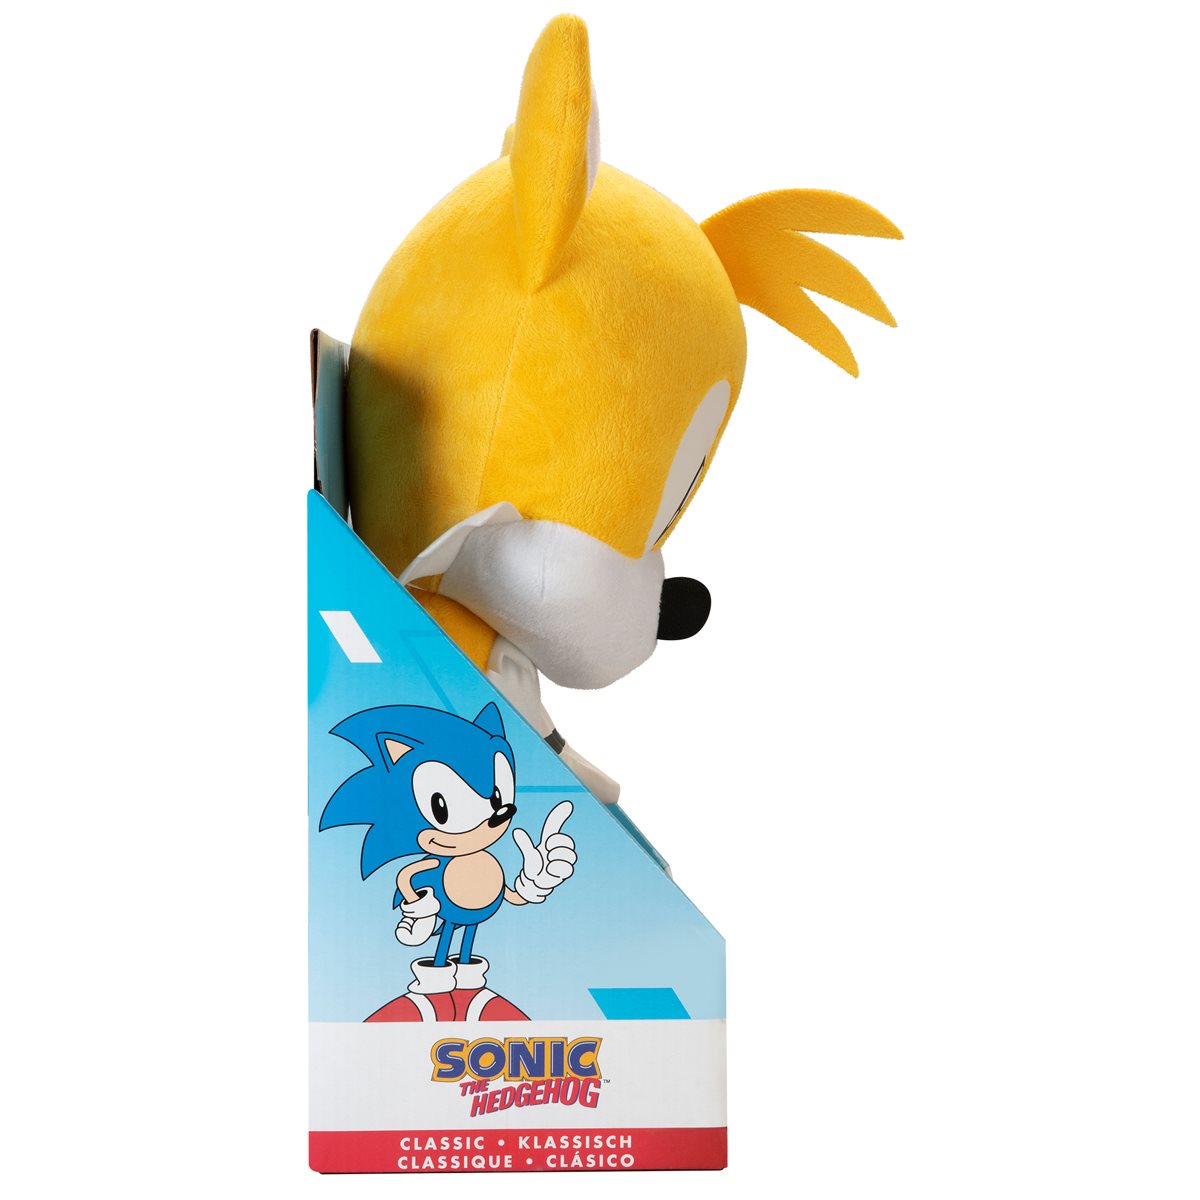 Sonic 2 Tails plush toy 30cm